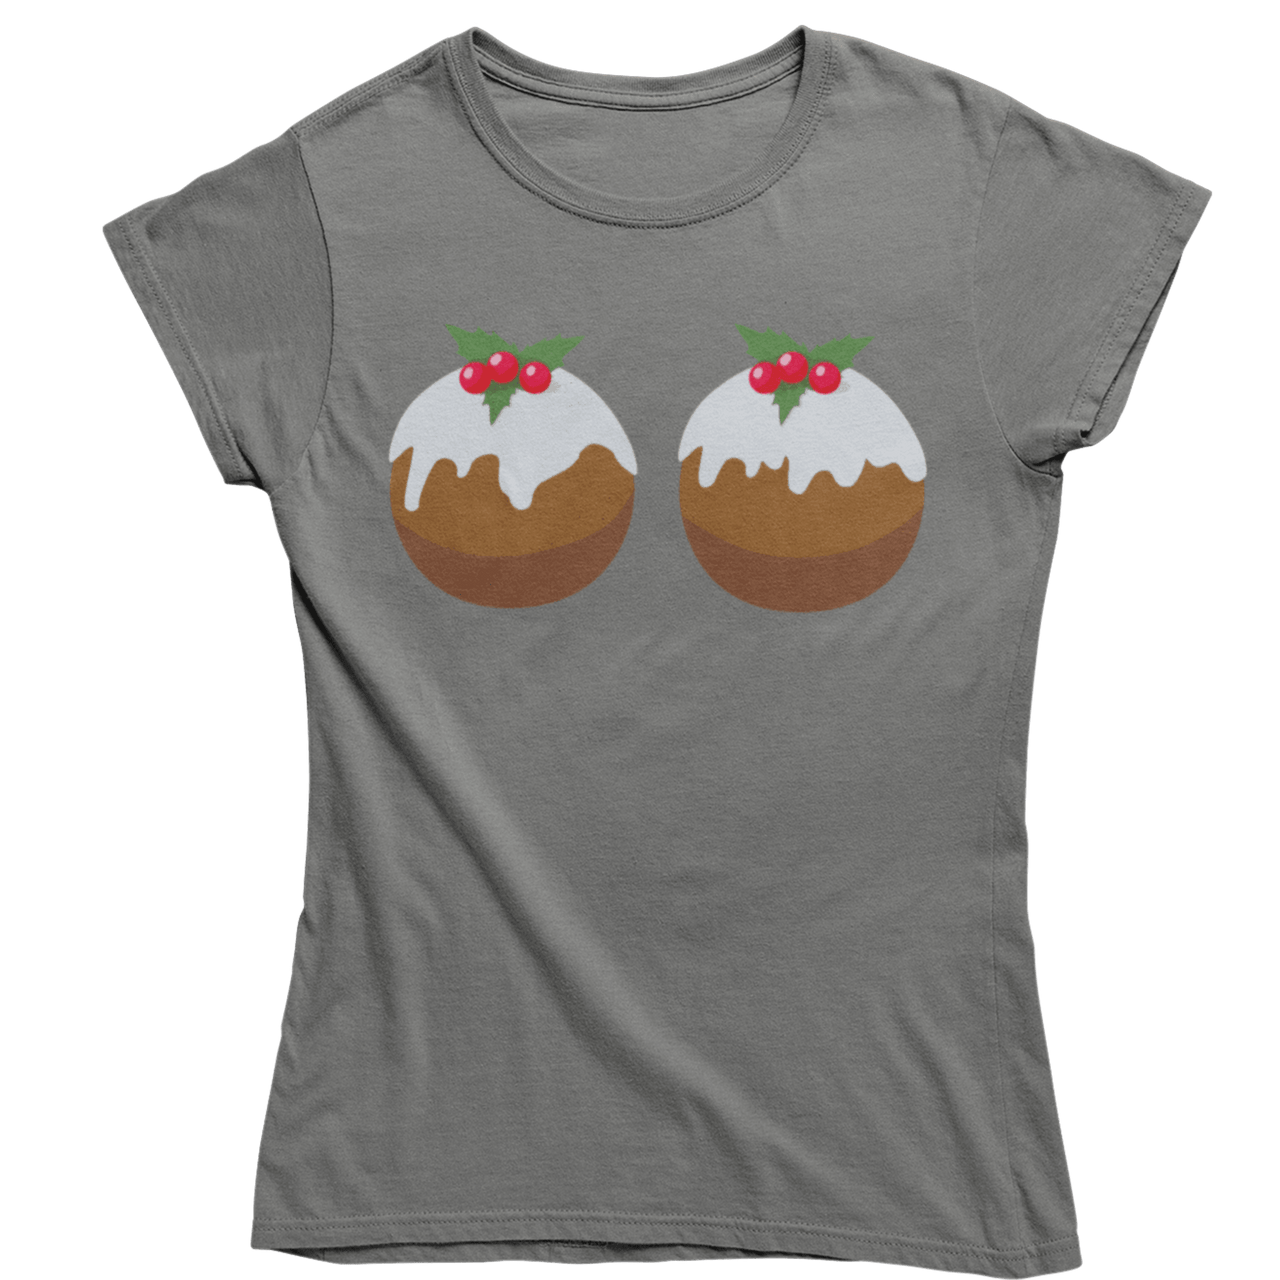 Fun Christmas Puddings T-Shirt for Women 8Ball